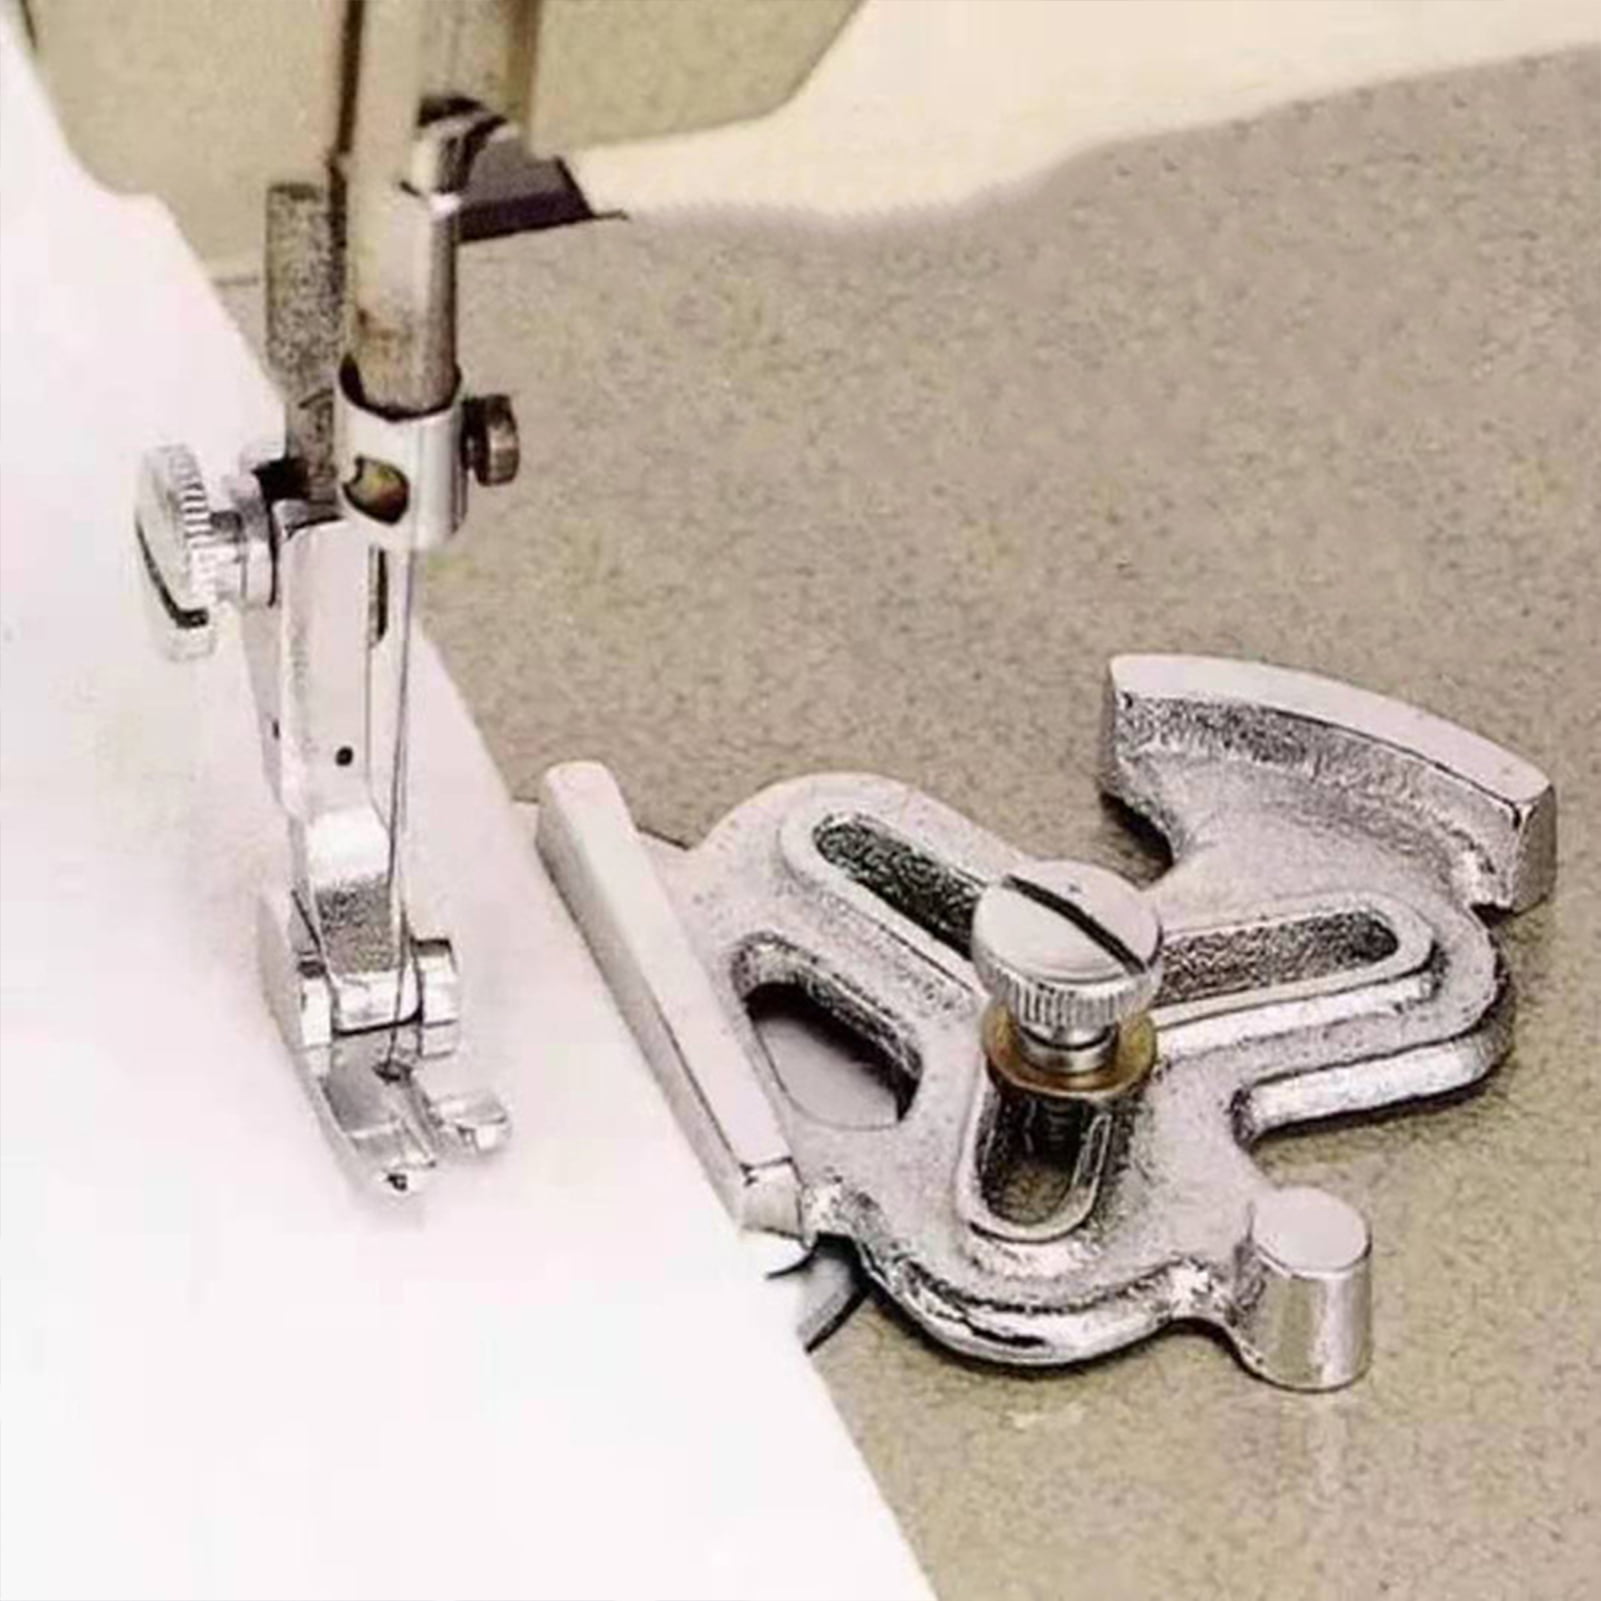 DENEST Industrial Sewing Machine Brushless Servo Motor 600W For Consew Sew  Machine 